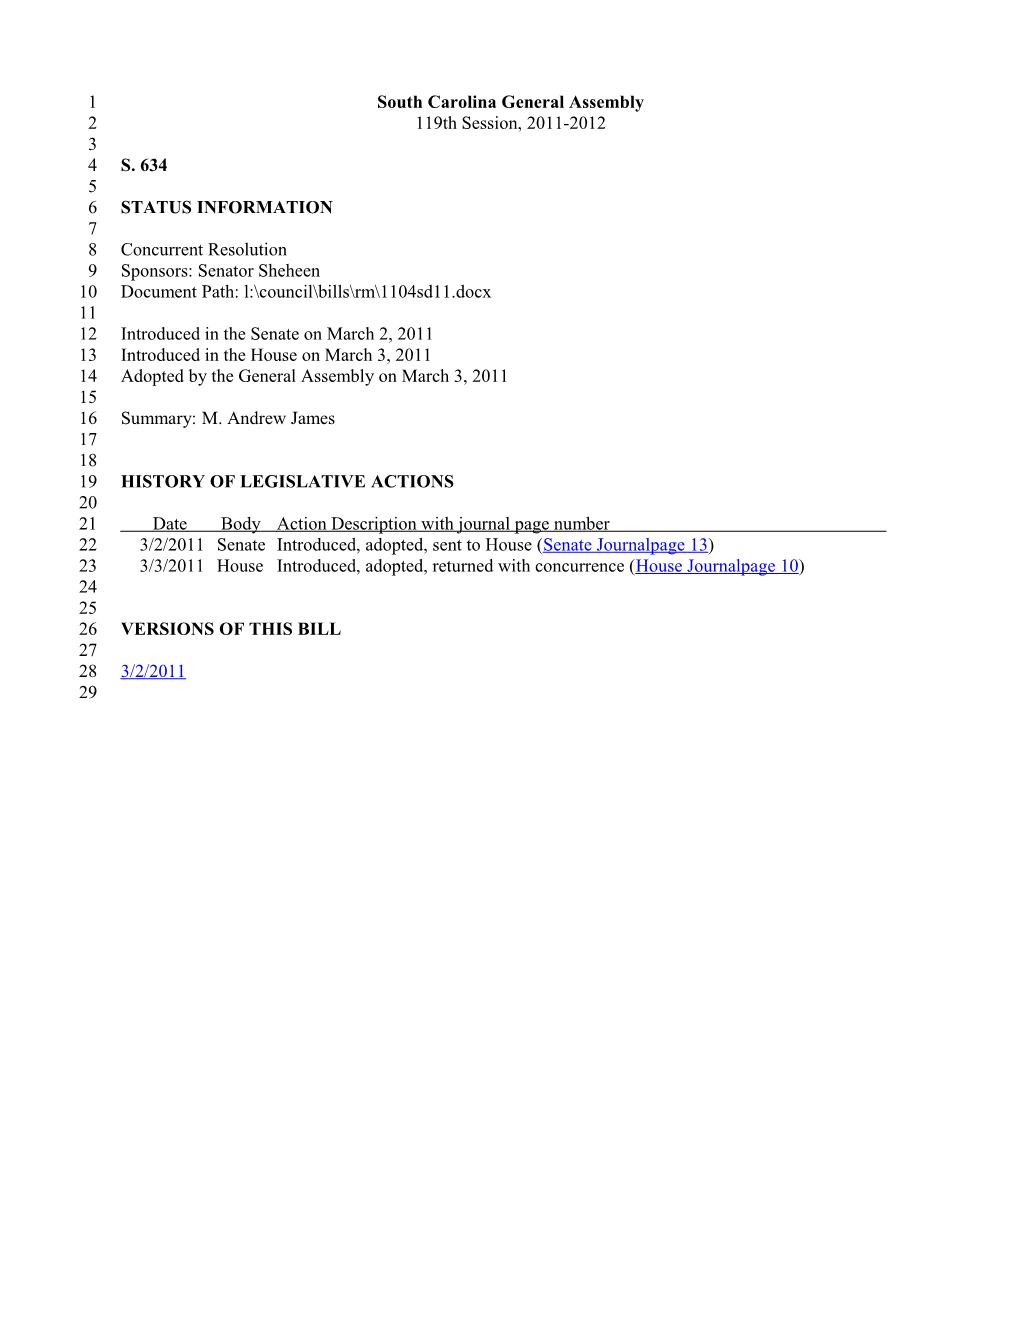 2011-2012 Bill 634: M. Andrew James - South Carolina Legislature Online